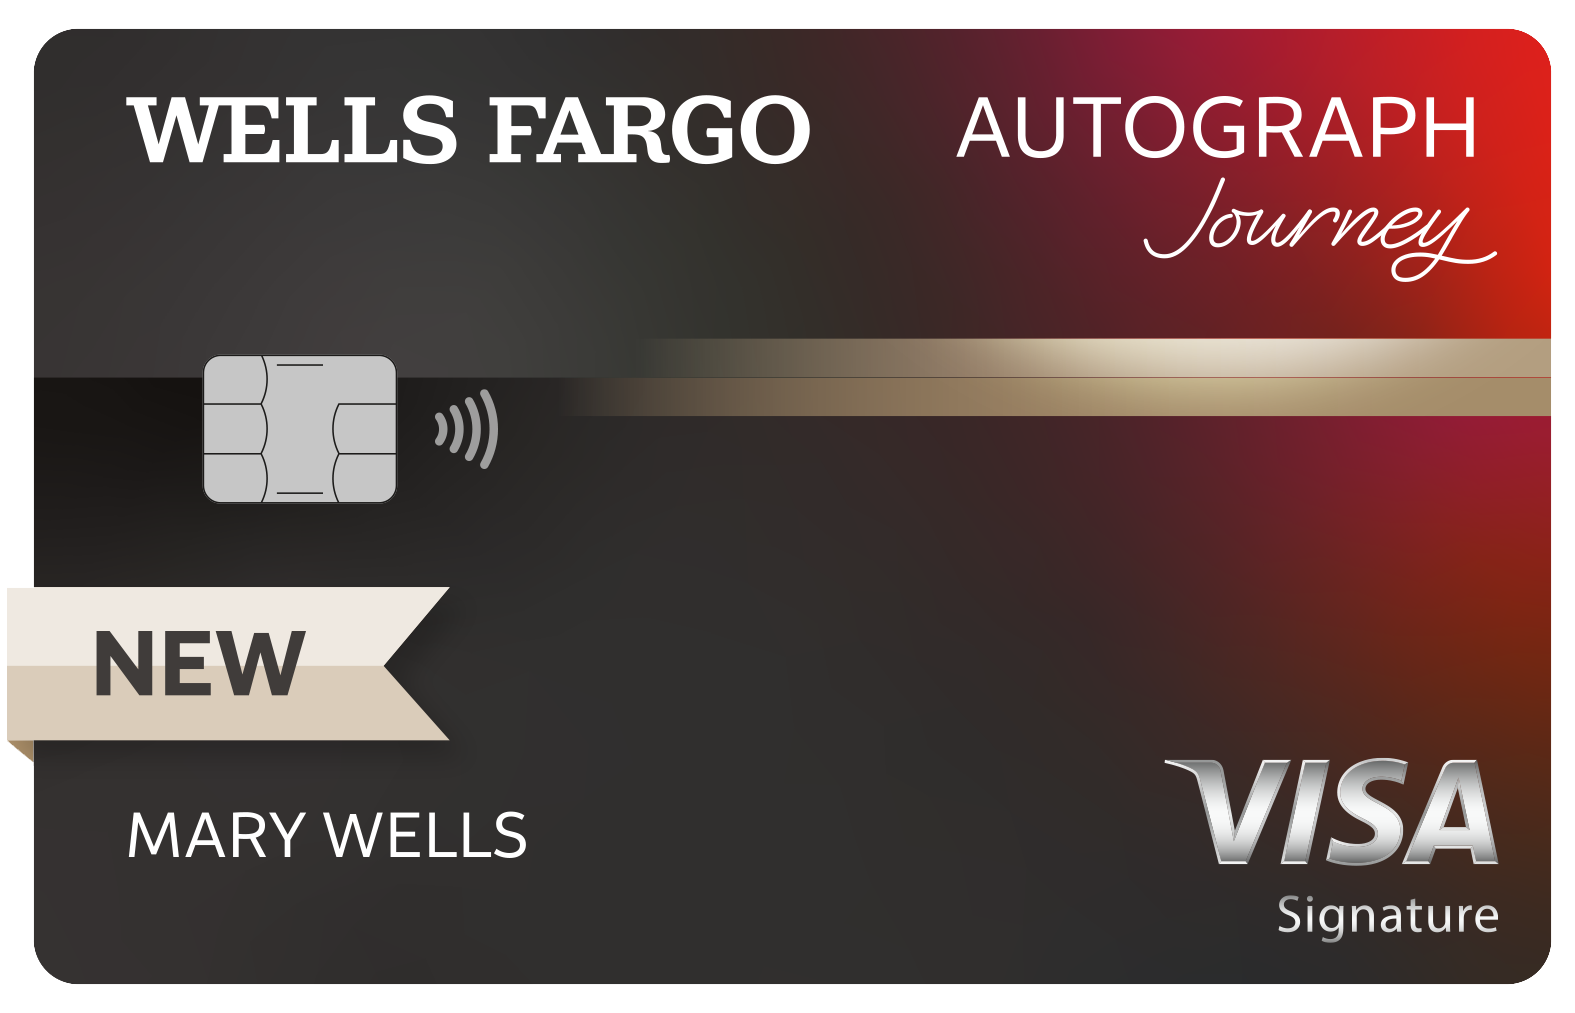 Wells Fargo Autograph Journey℠ Card Image